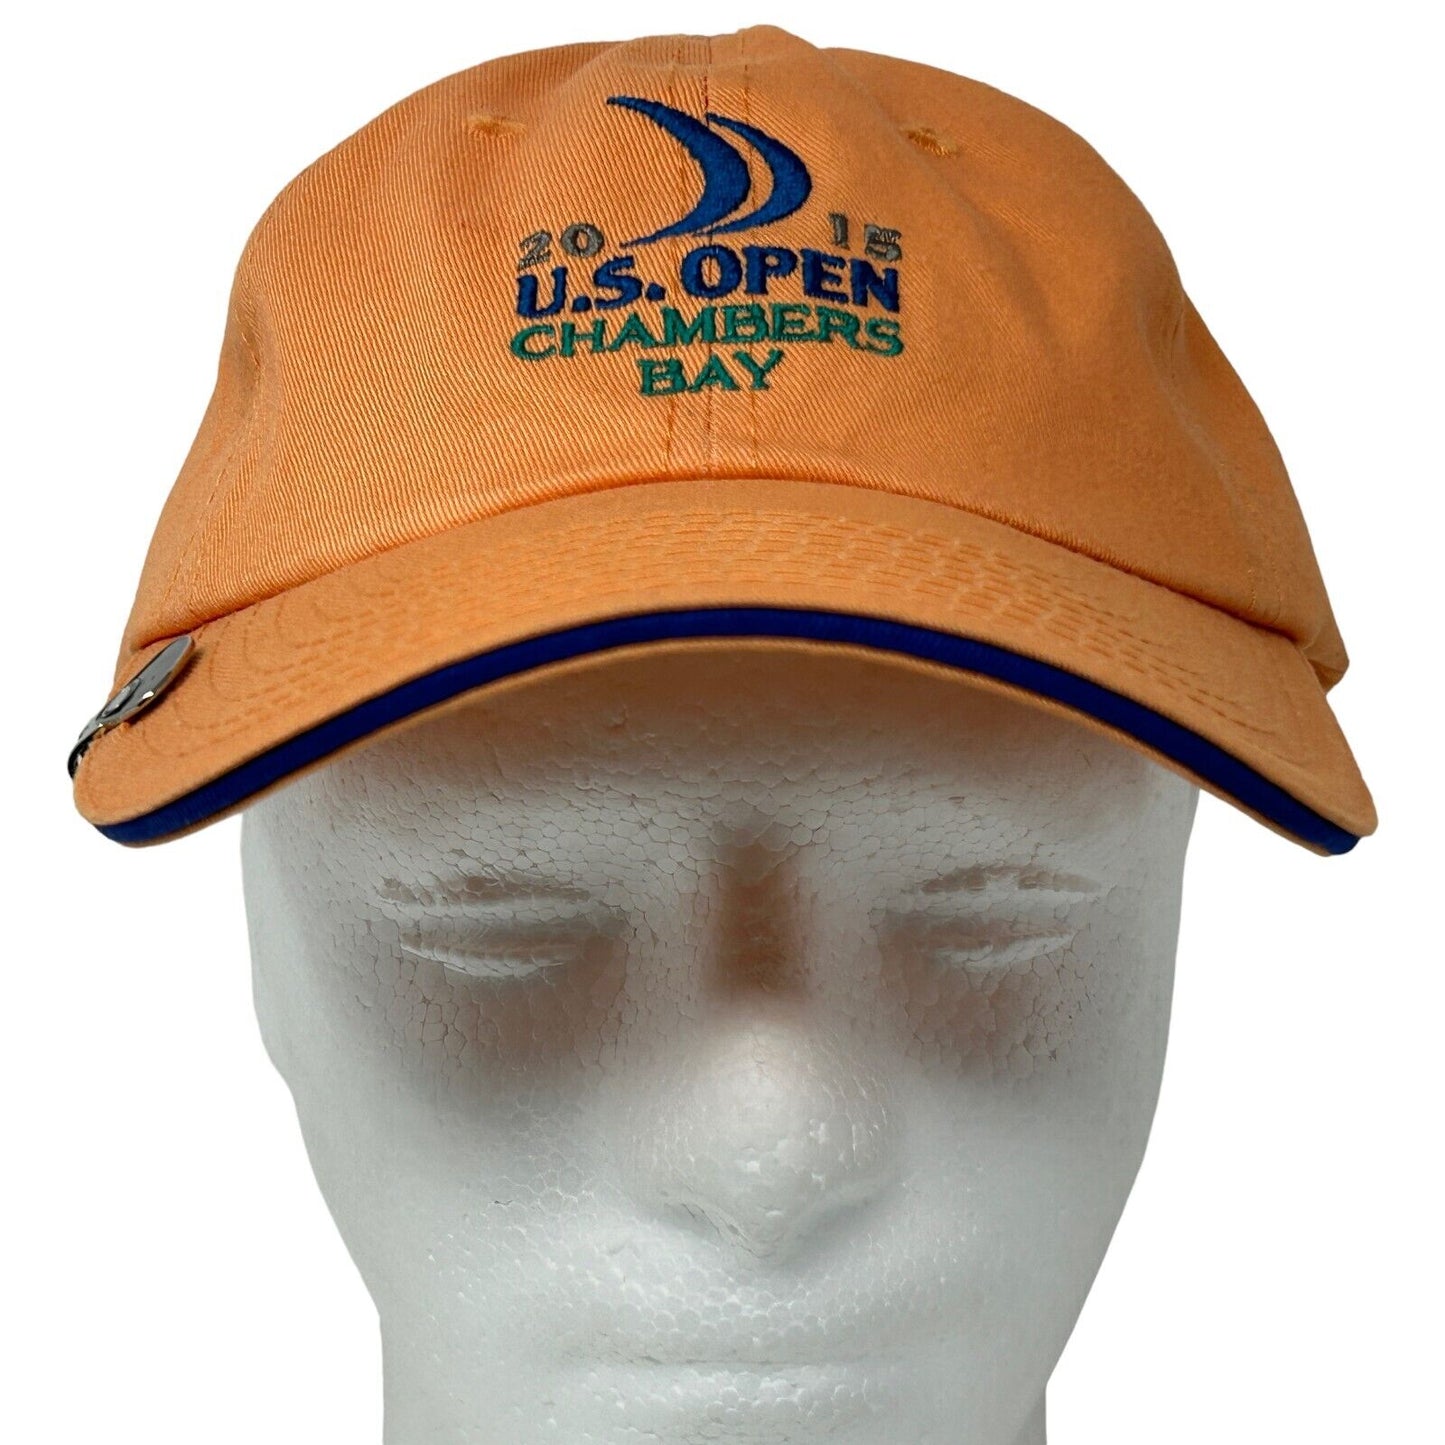 2015 US Open Chambers Bay Golf Course Dad Hat Ball Marker Orange Baseball Cap